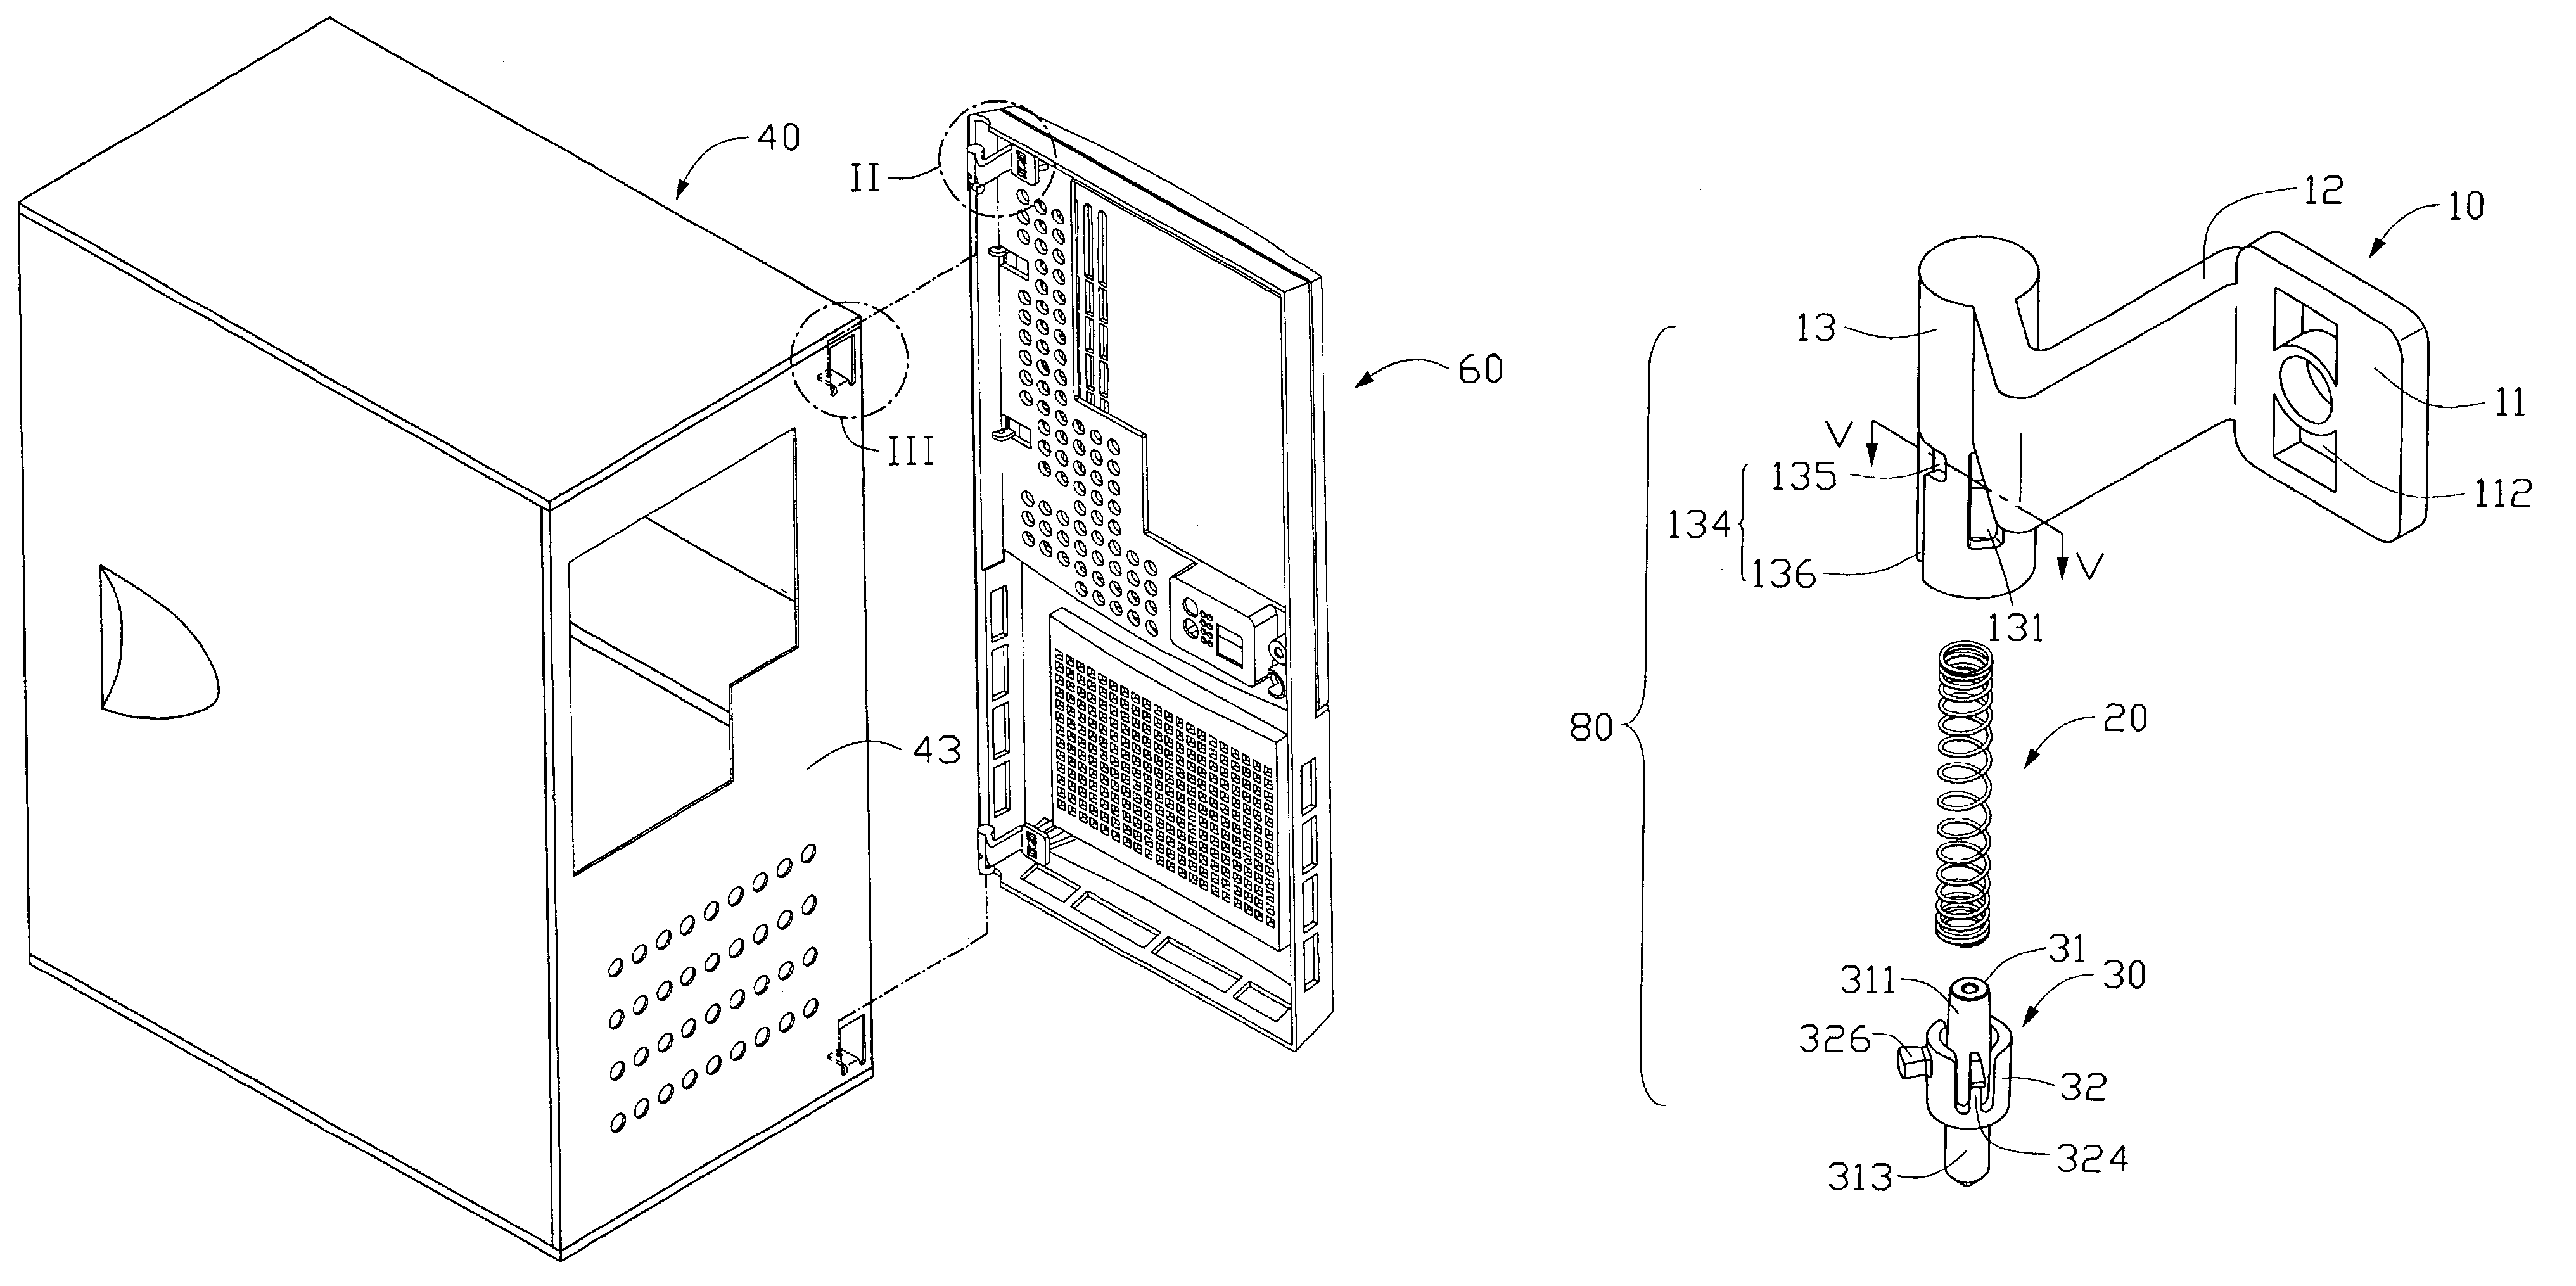 Computer enclosure incorporating bezel pivoting mechanism